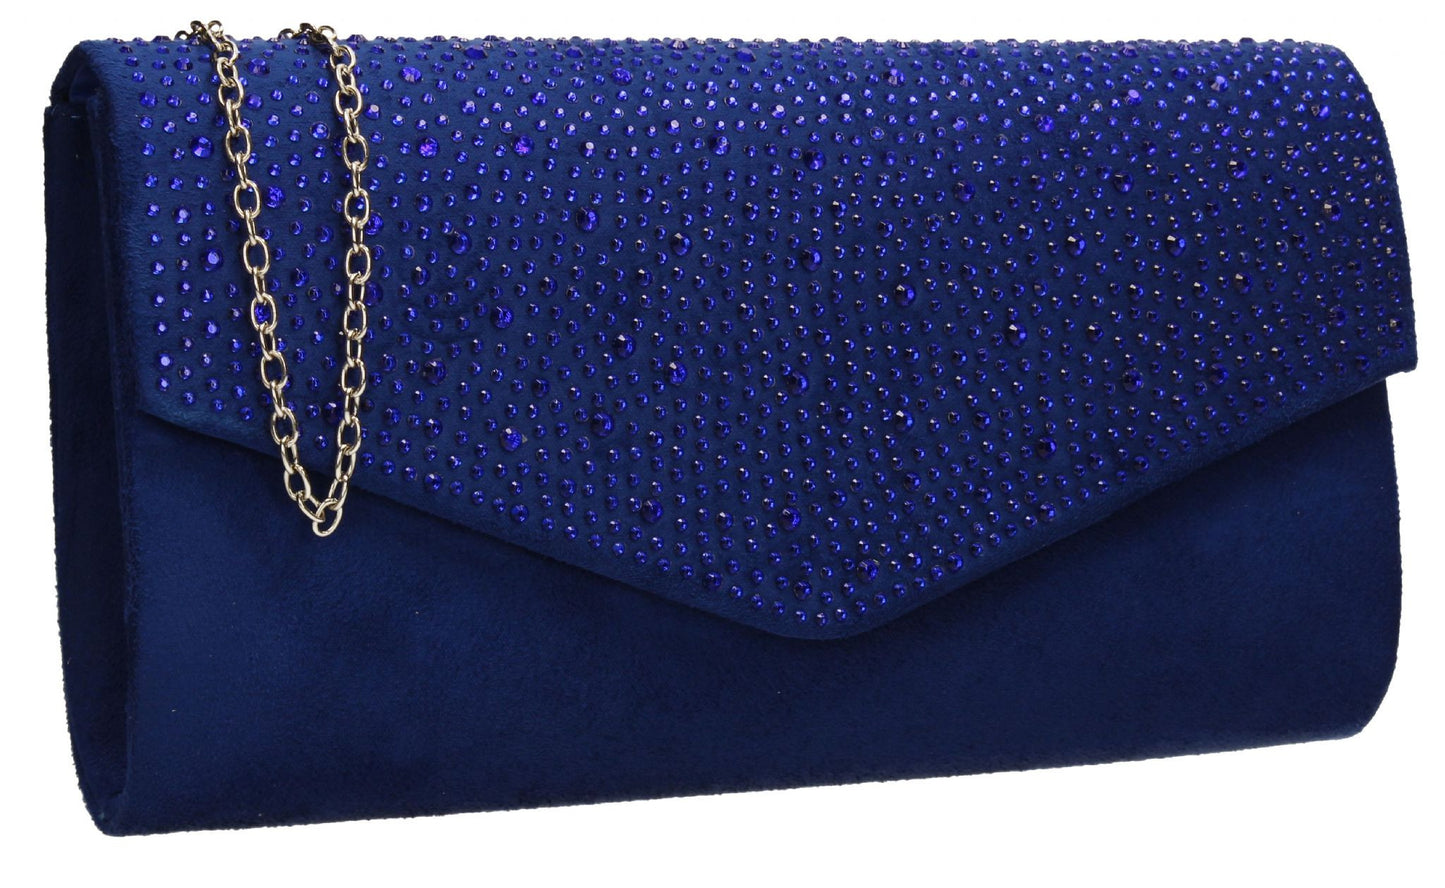 SWANKYSWANS Sandra Clutch Bag Royal Blue Cute Cheap Clutch Bag For Weddings School and Work